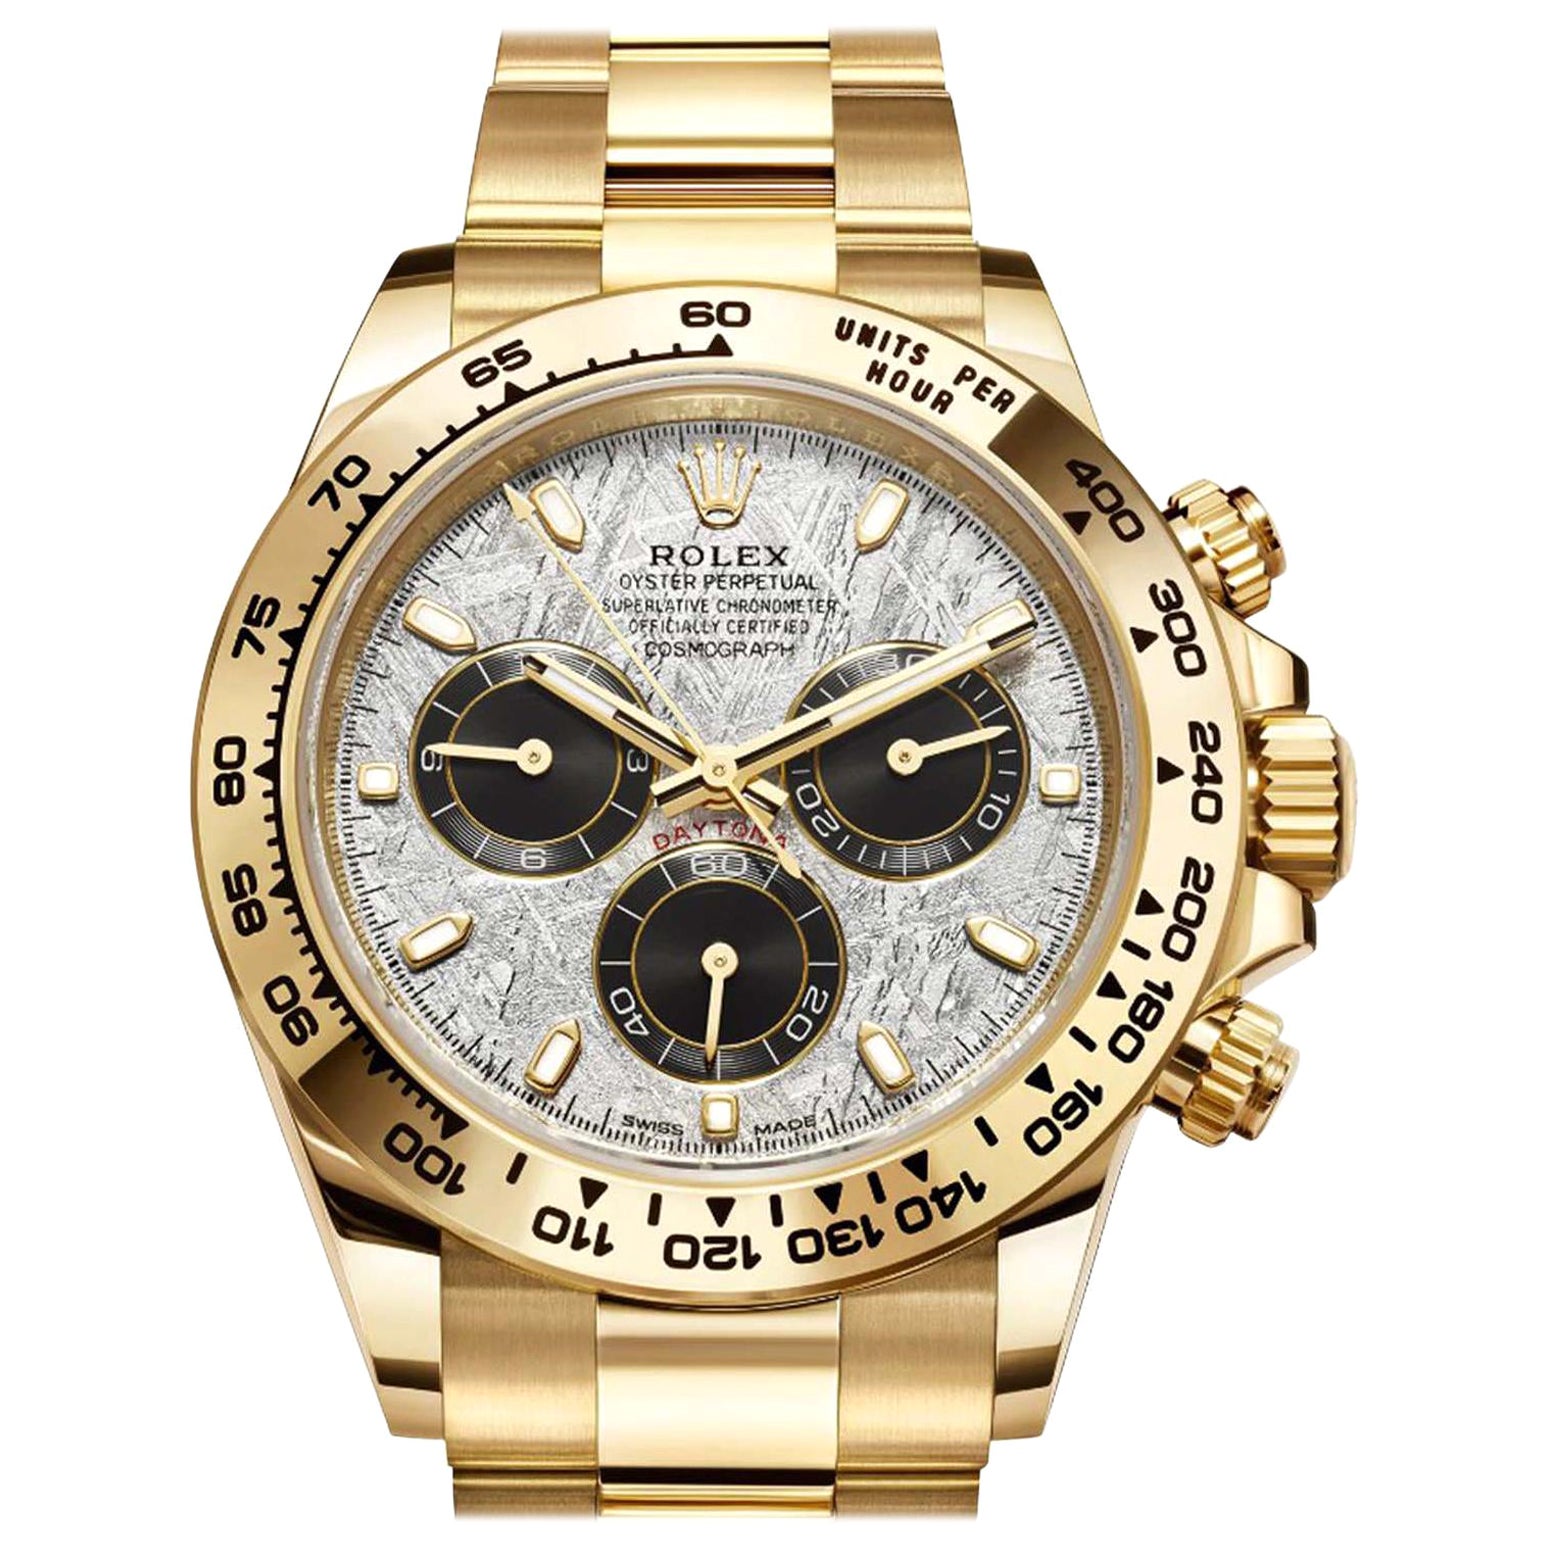 Rolex Daytona in 18k Yellow Gold with Meteorite Dial Watch REF 116508